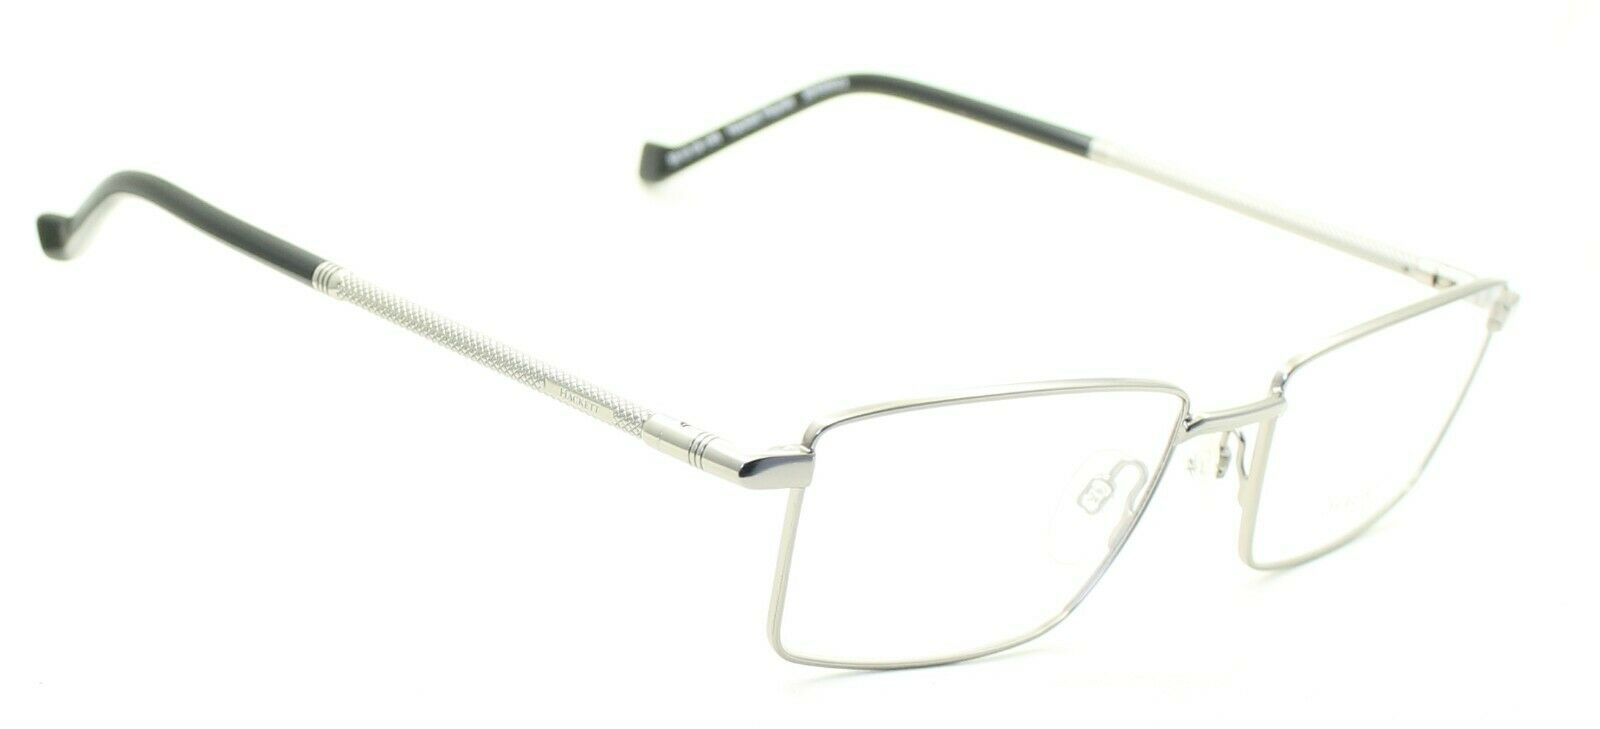 HACKETT Mayfair 30400023 55mm Eyewear FRAMES RX Optical Glasses Eyeglasses -New